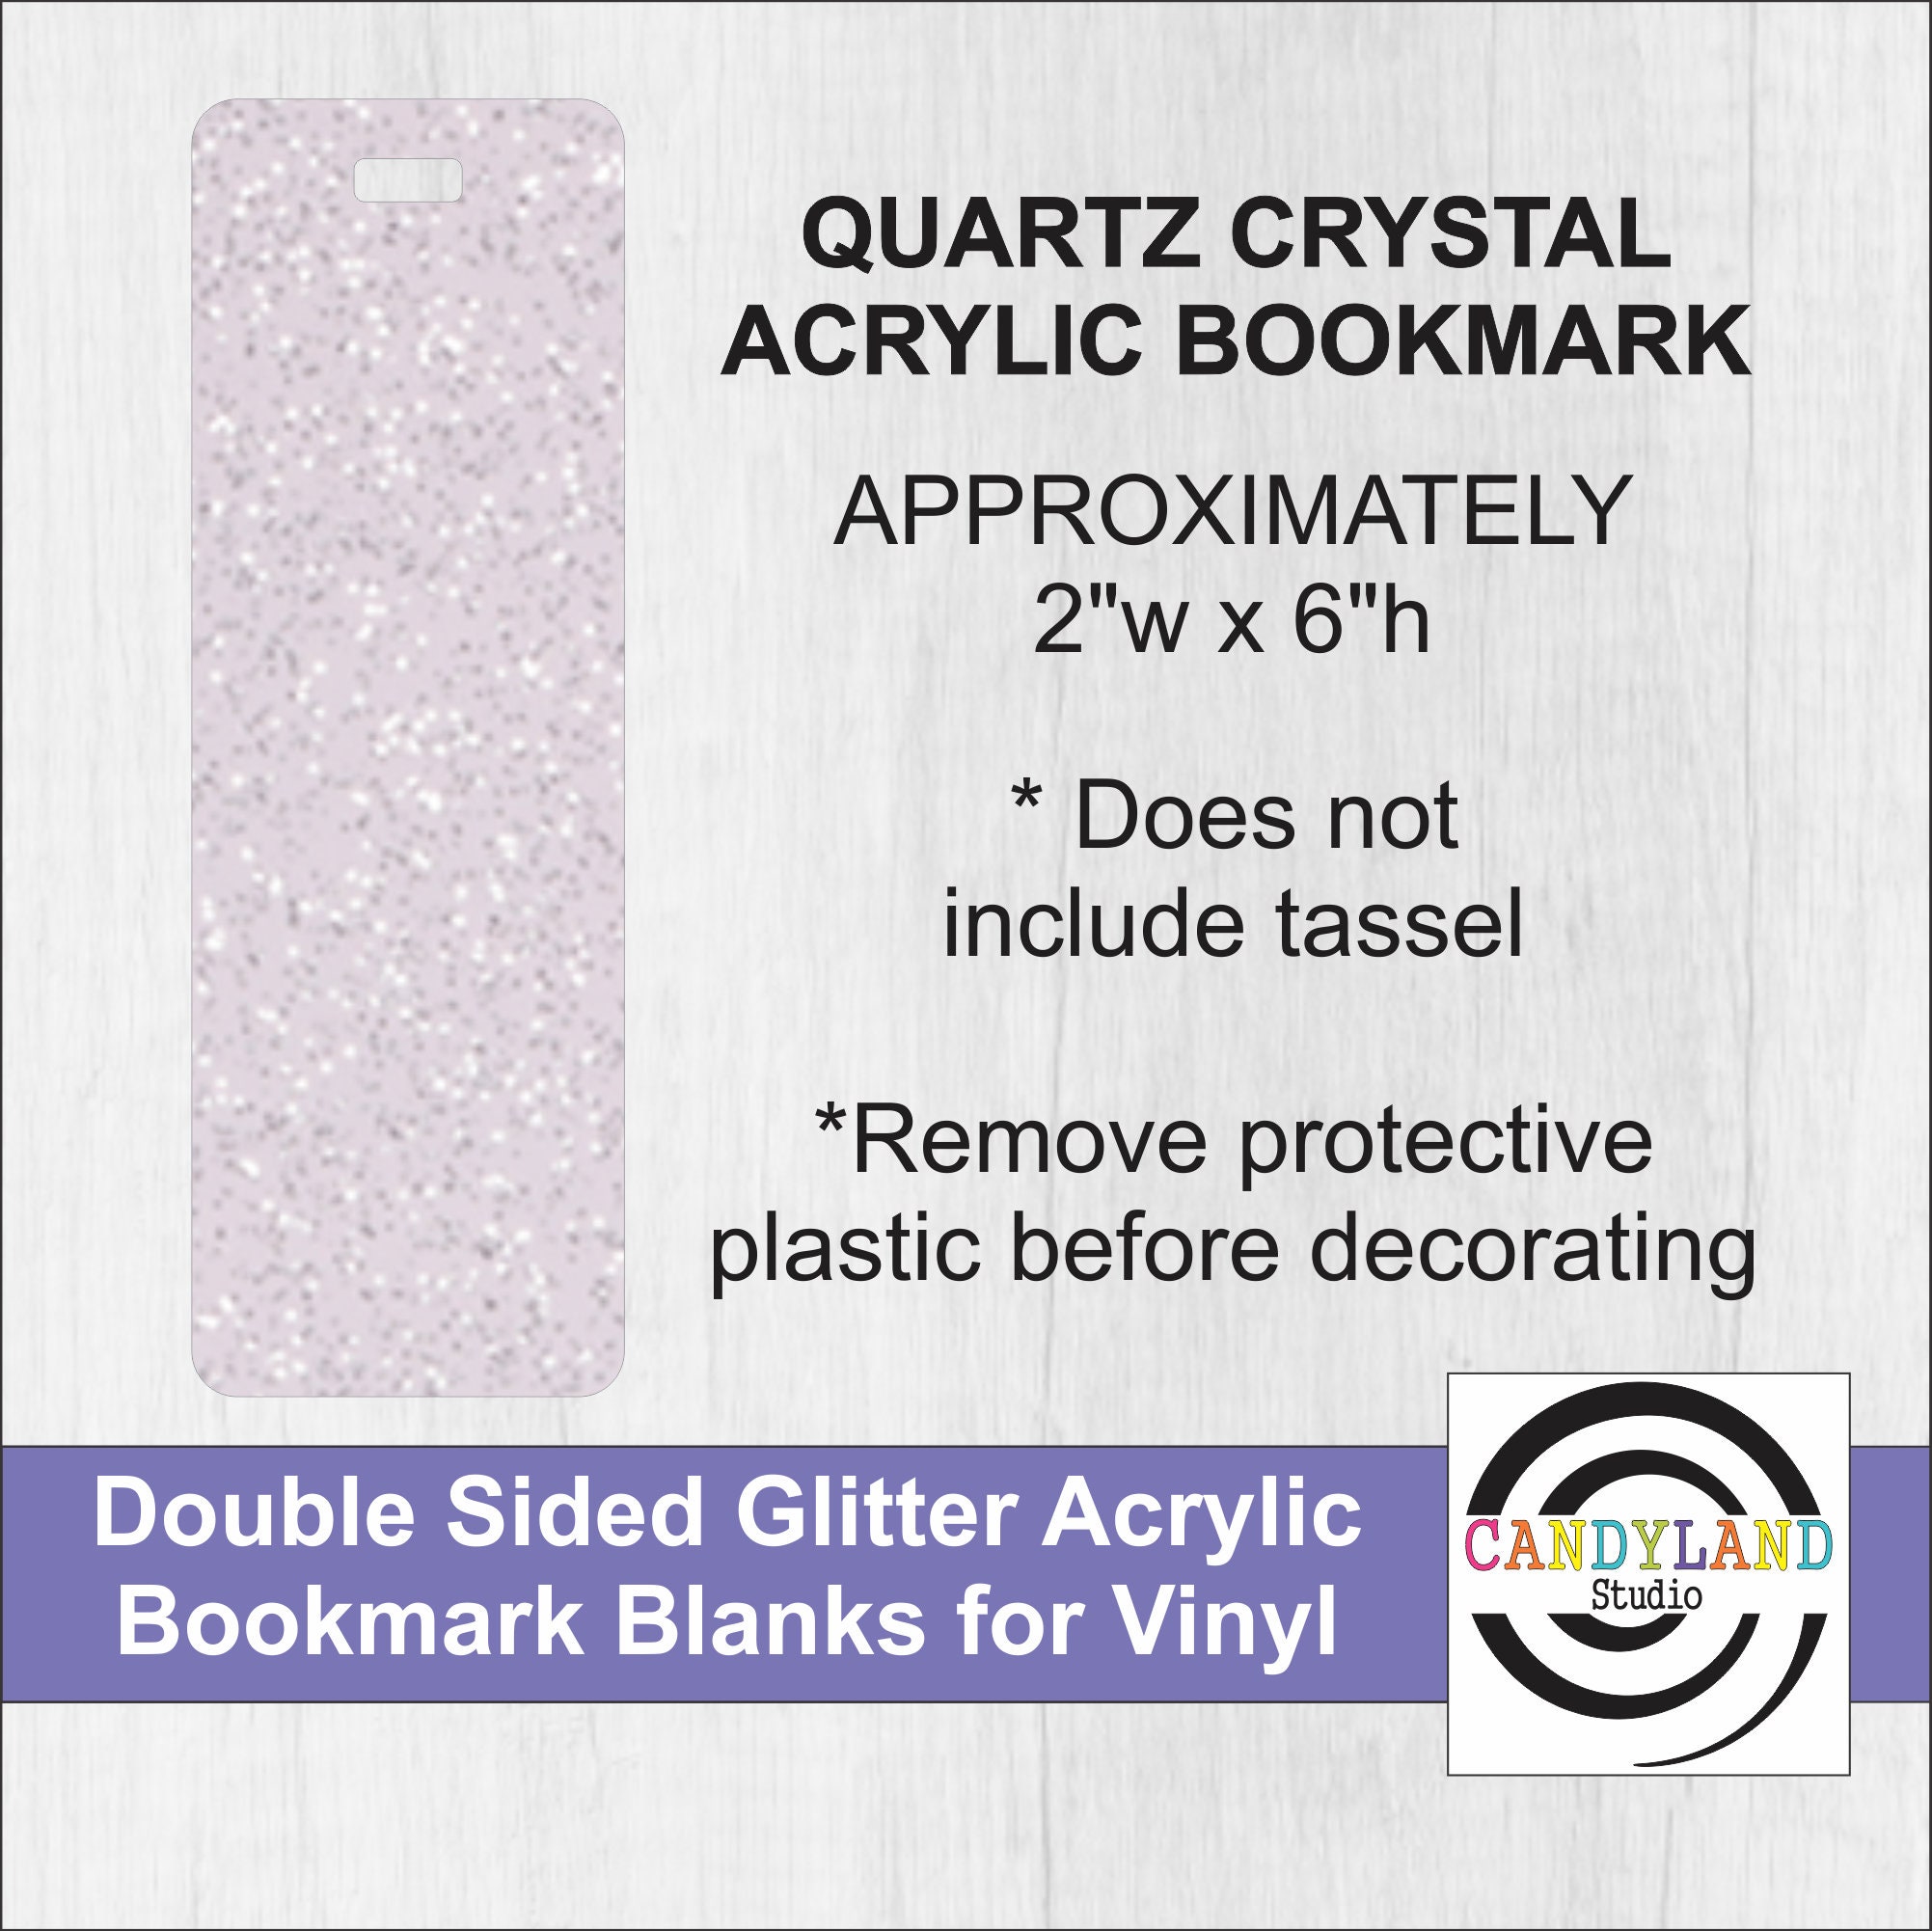 Crystal clear Quartz Glitter Acrylic Bookmark Blanks for Vinyl 2 X 6 